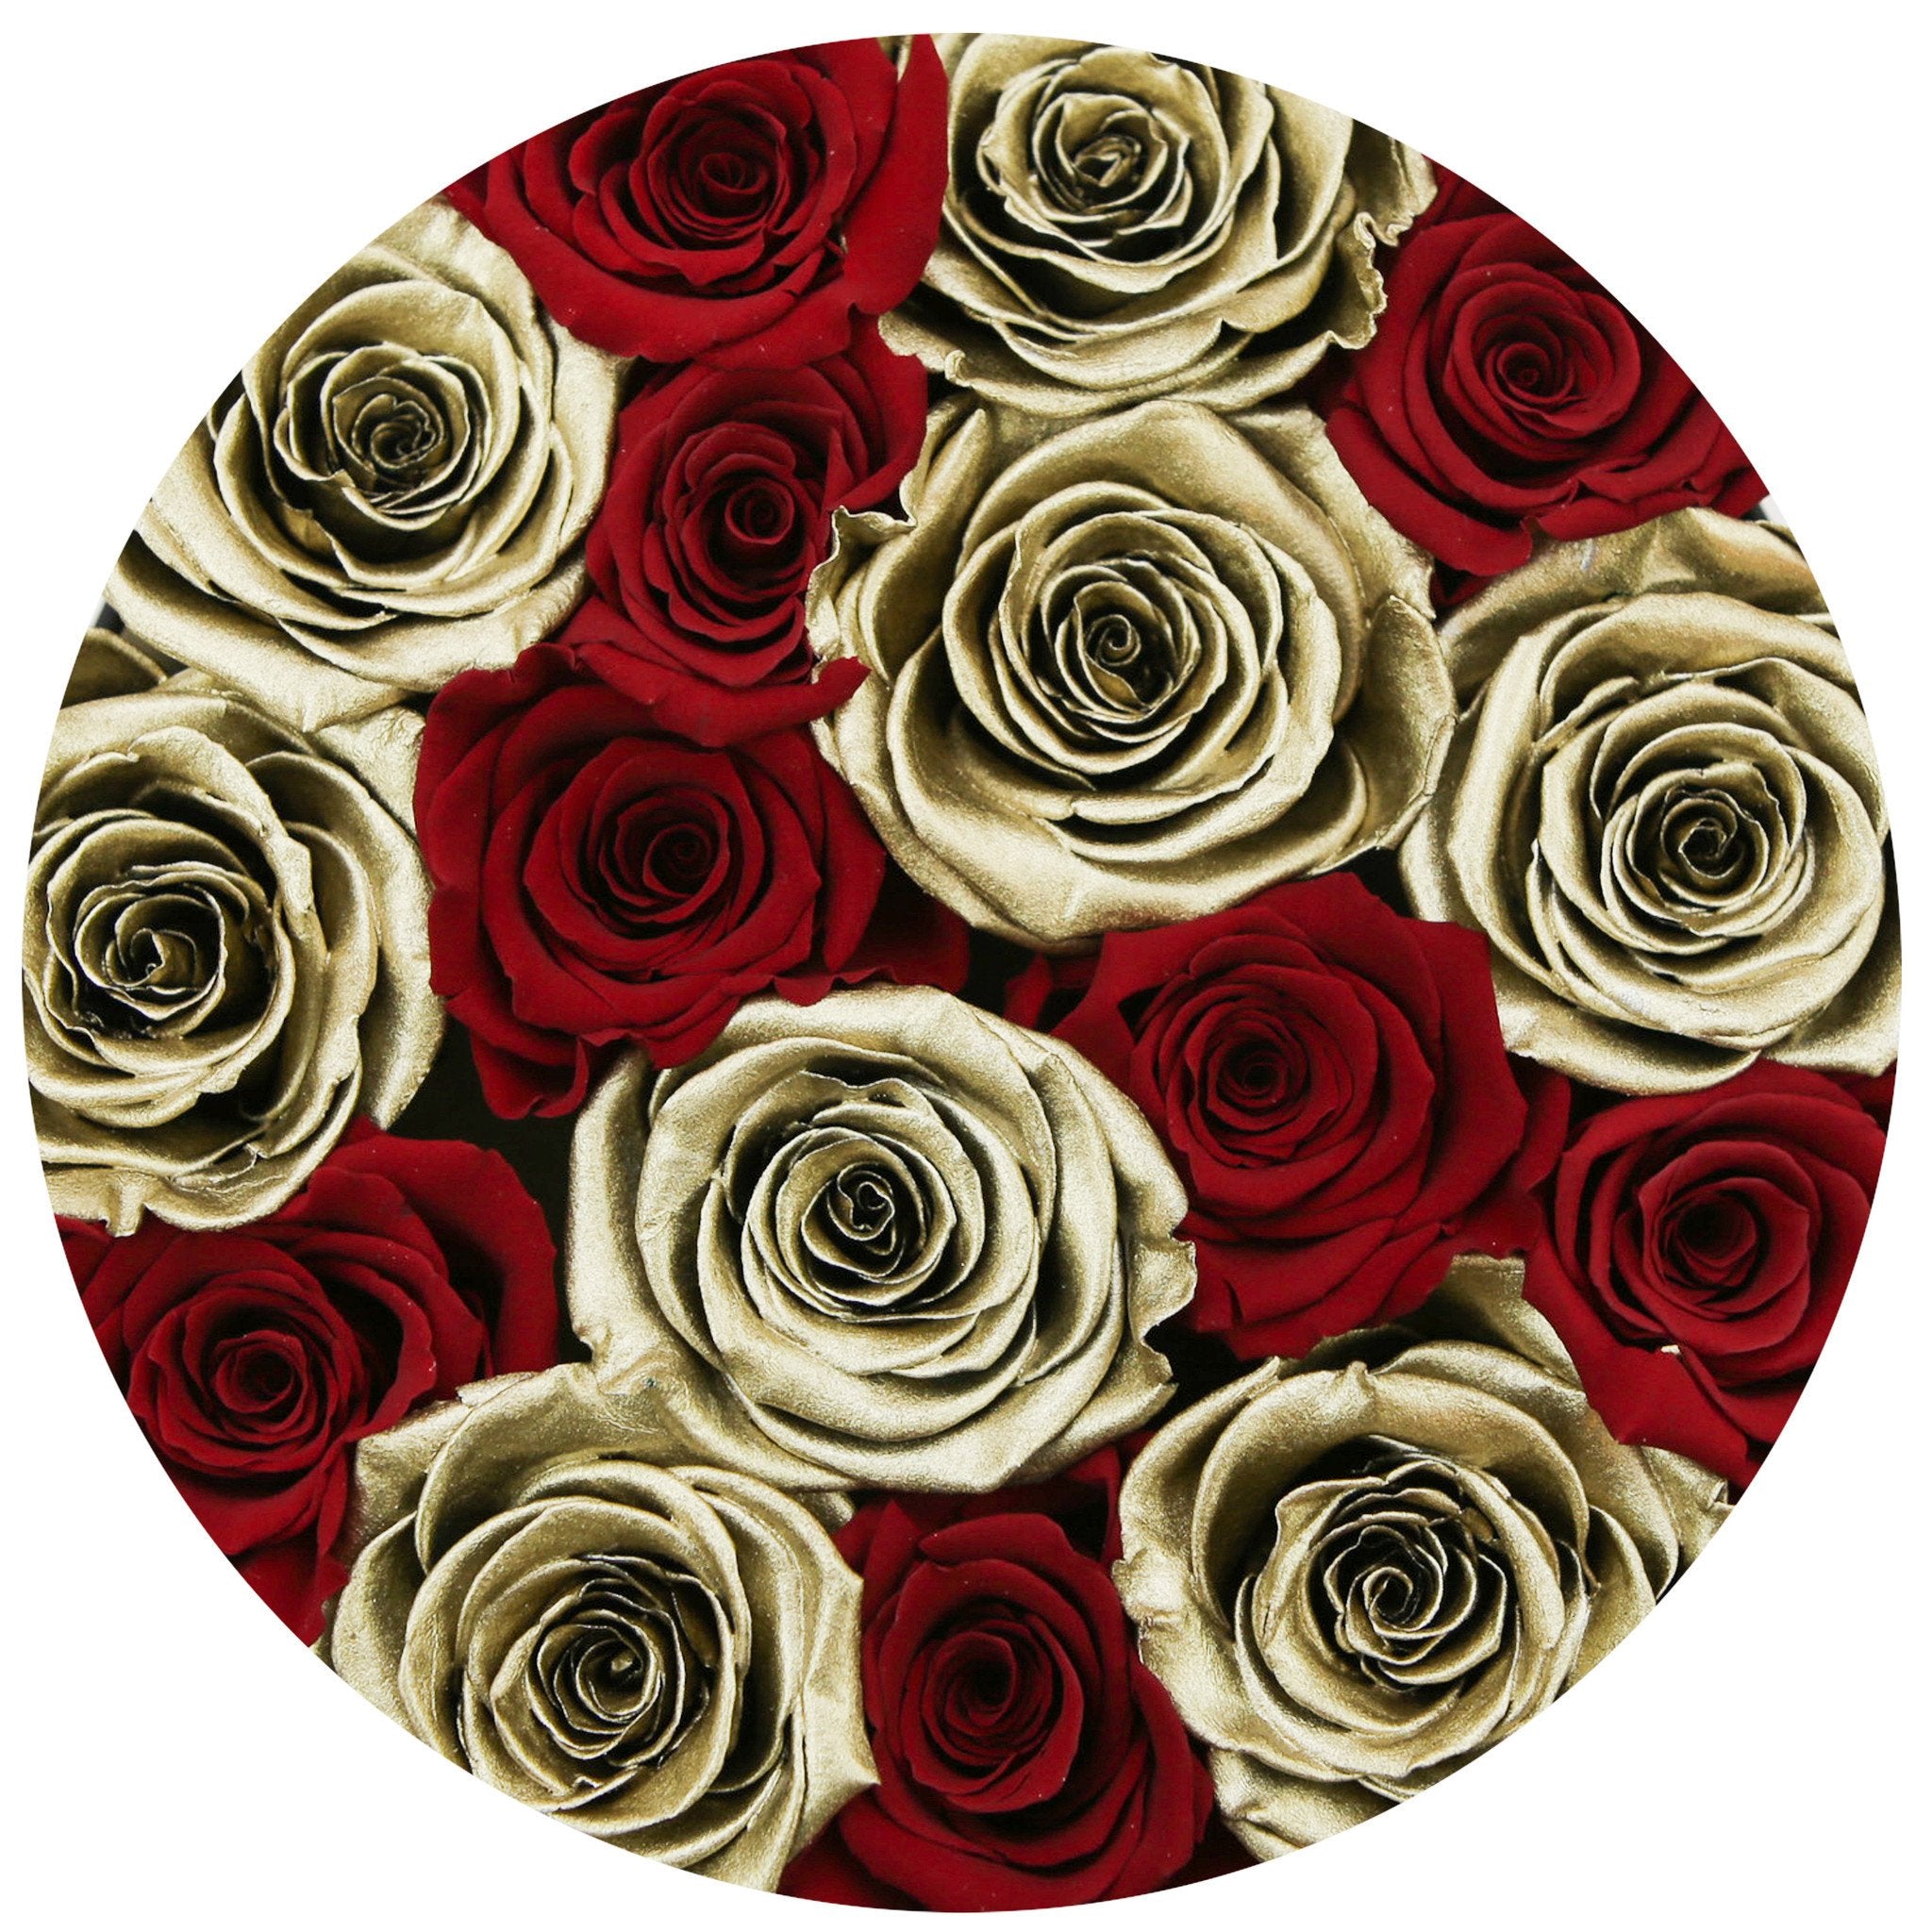 Cutie neagră mică cu trandafiri naturali roșii & aurii - Gold edition